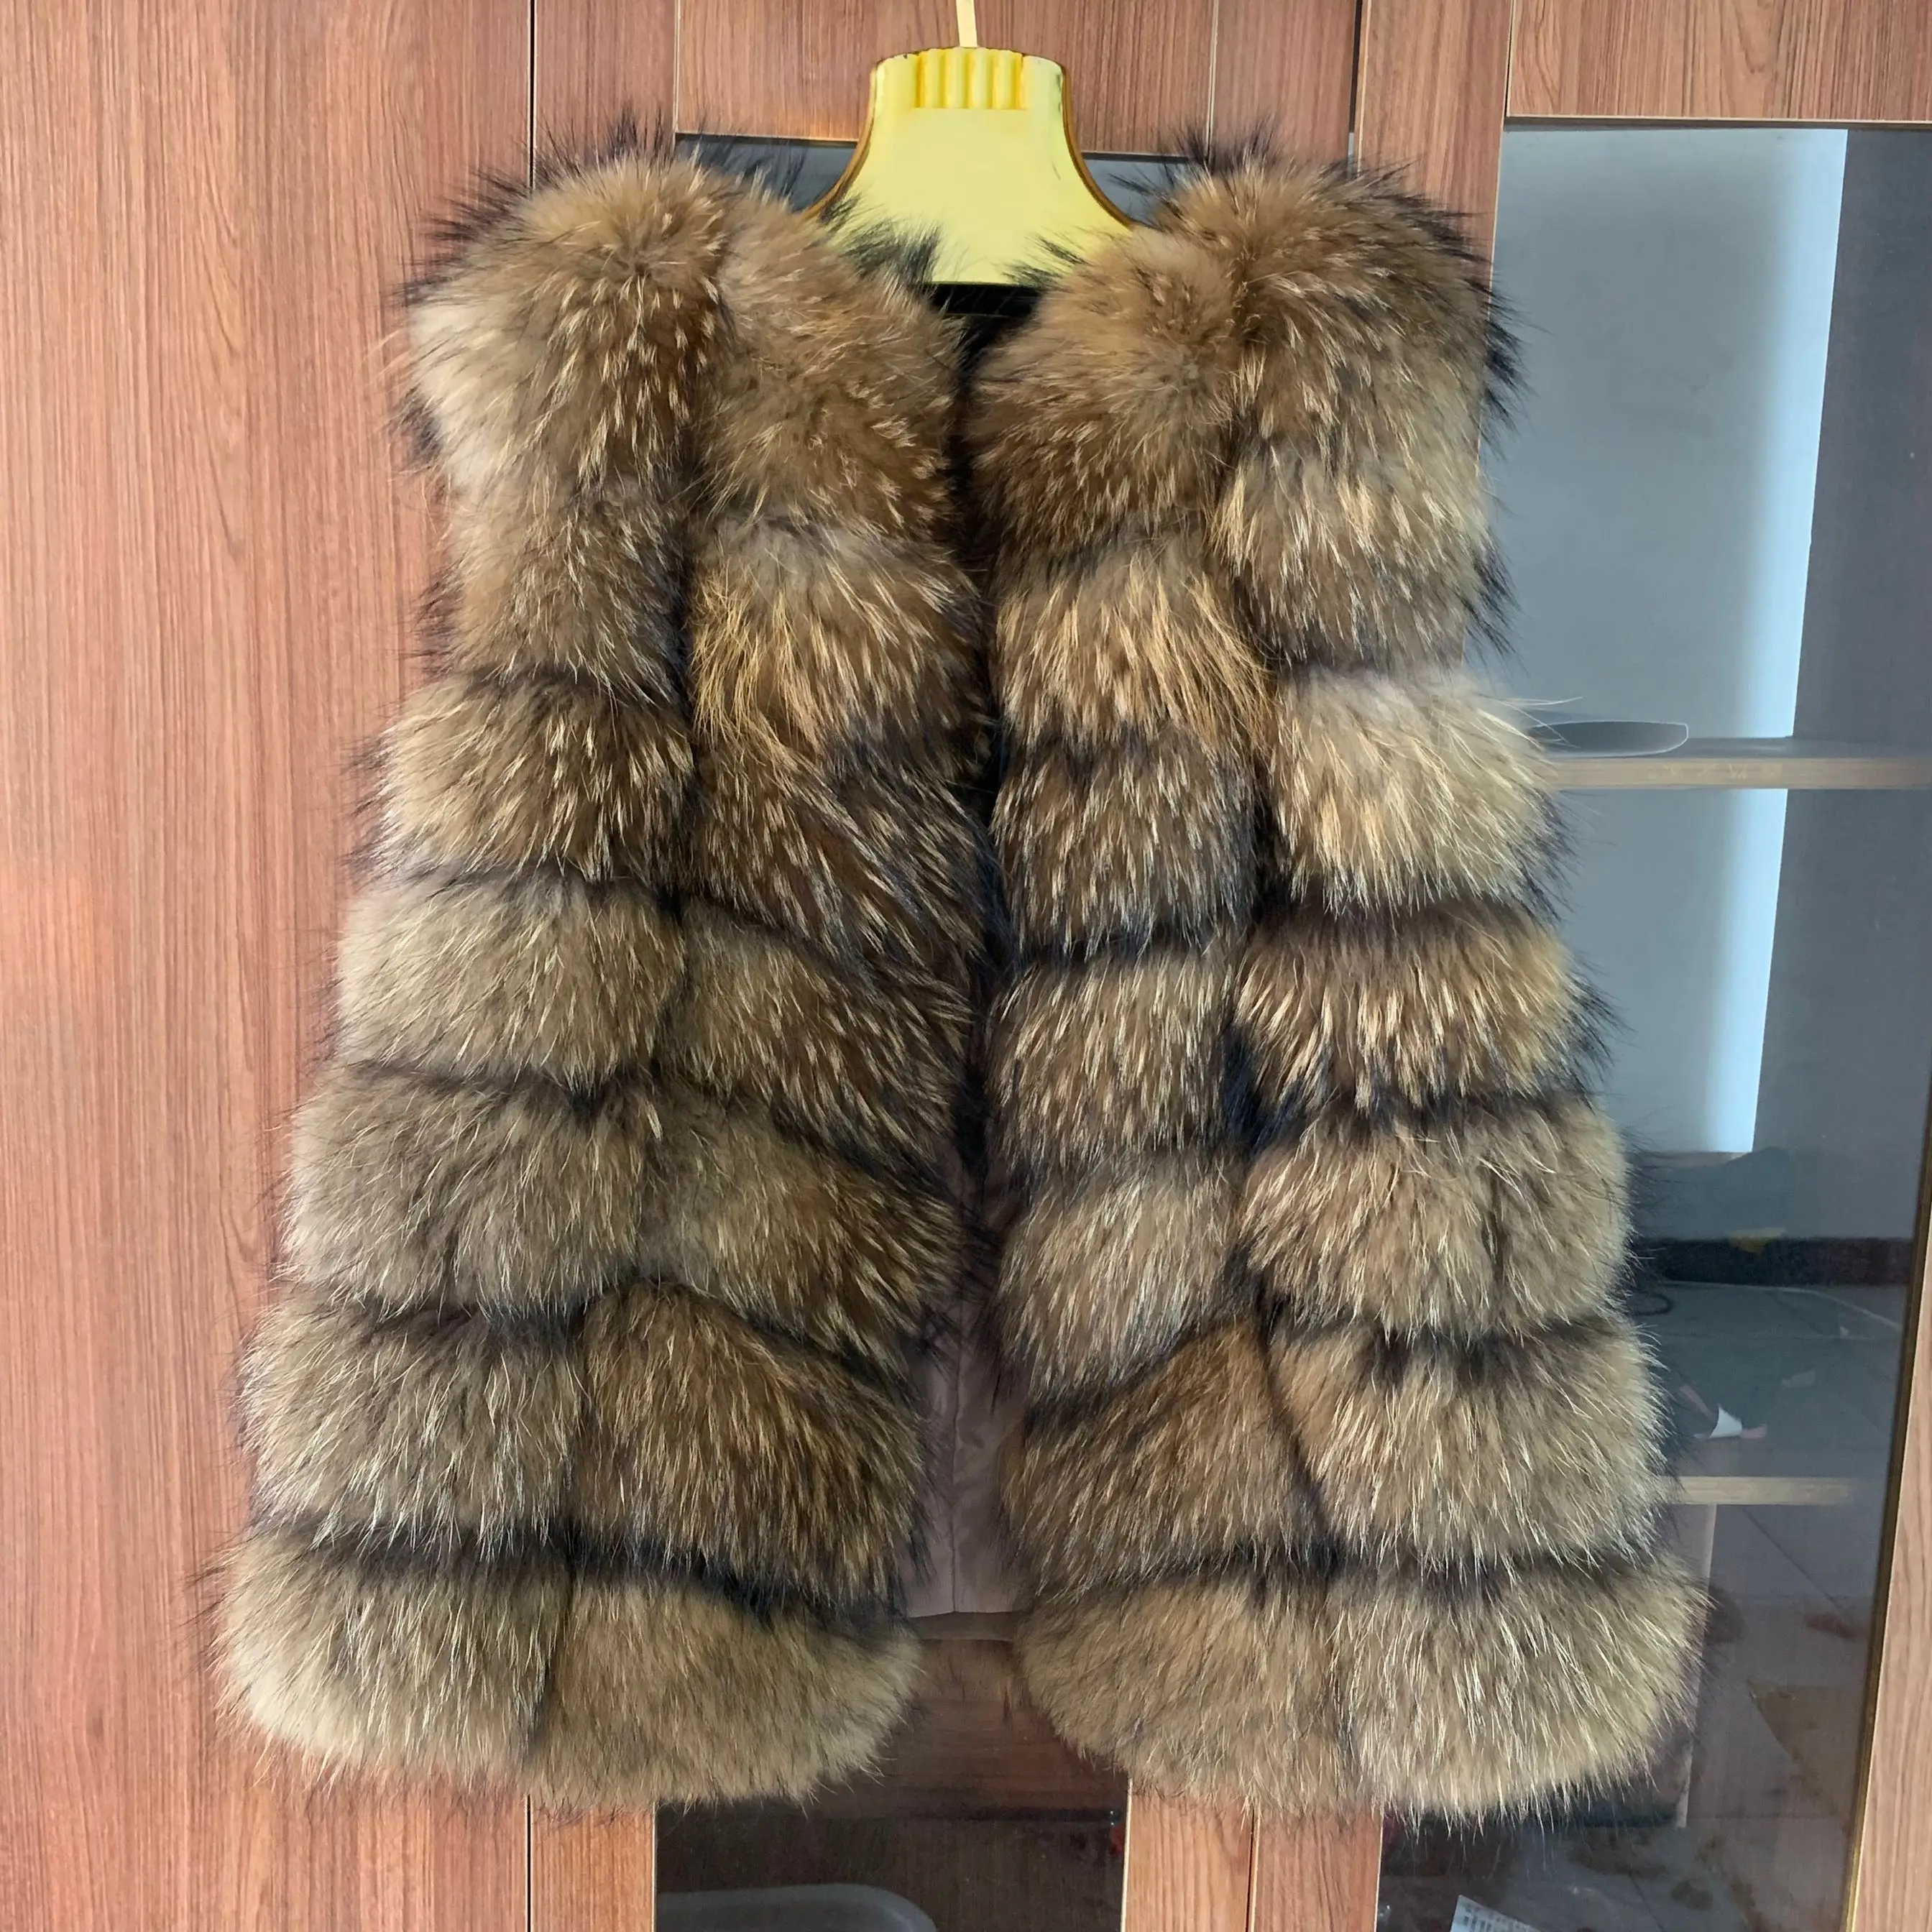 Real fox fur vest women's autumn and winter warm natural fur jacket raccoon fur vest genuine fox fur coat high-quality free send enlarge